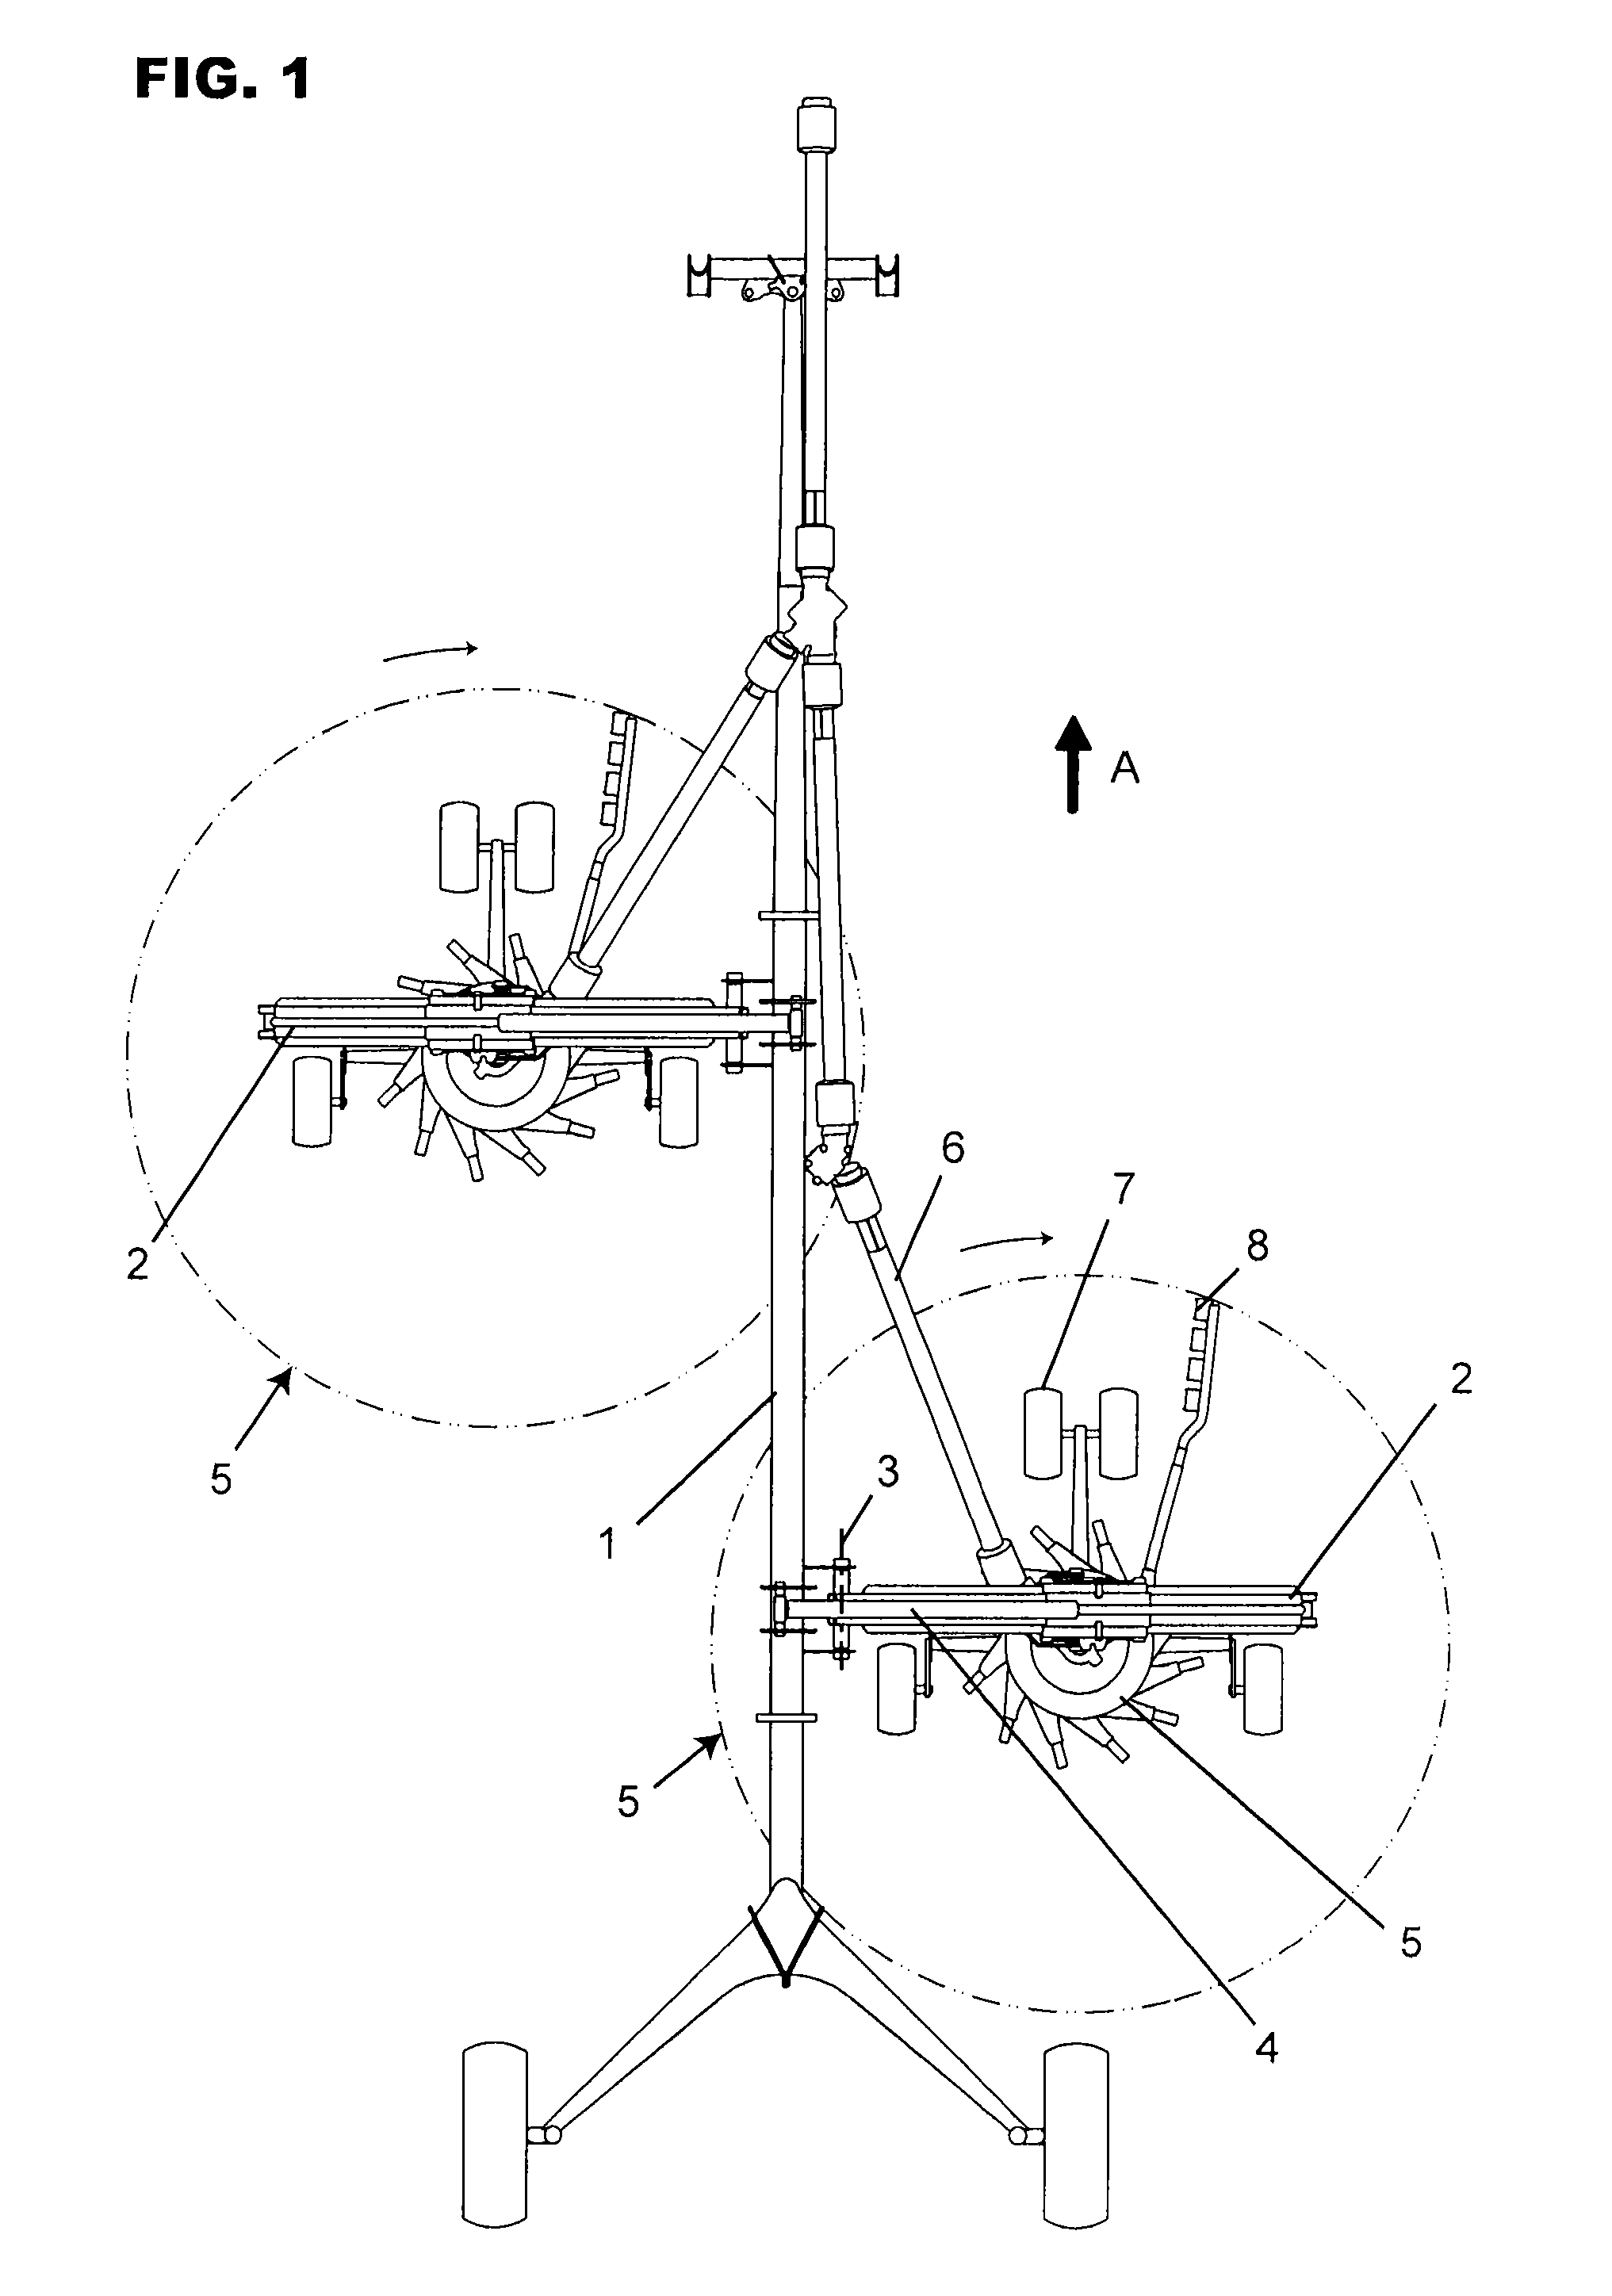 Haymaking machine with rotor blocking system